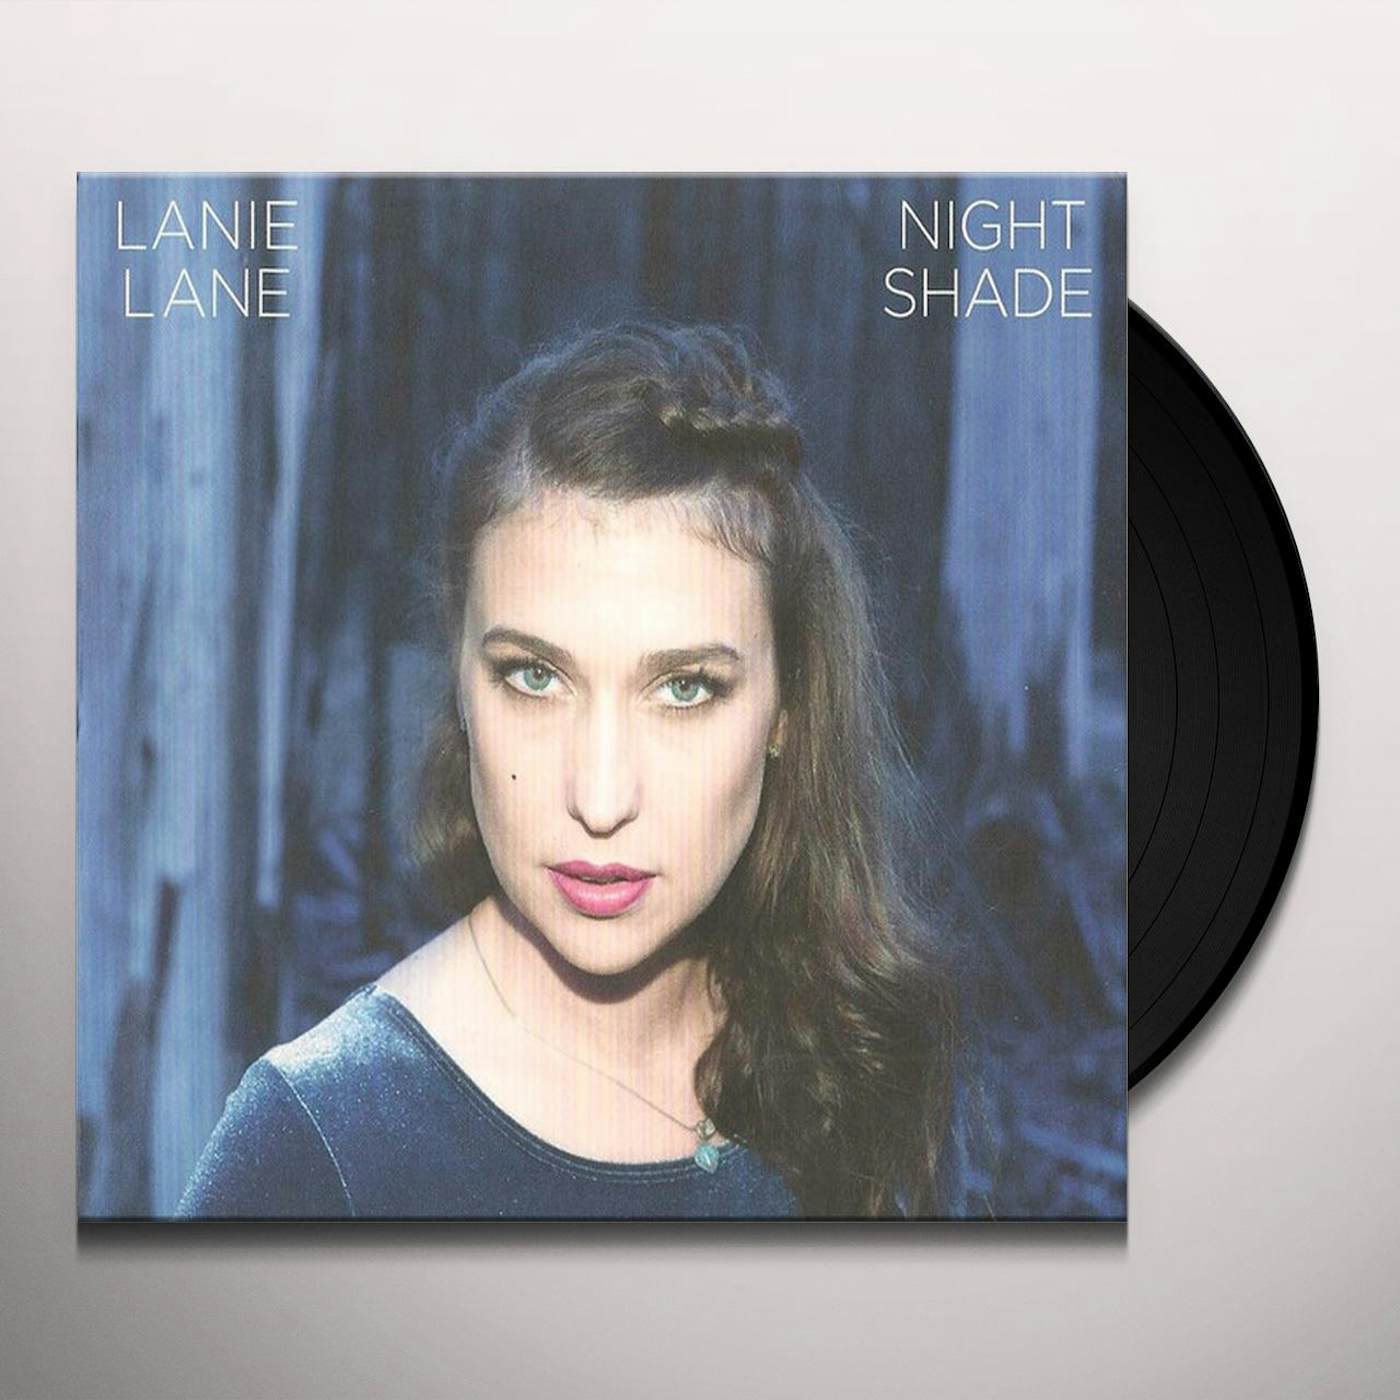 Lanie Lane NIGHT SHADE (AUS) (Vinyl)